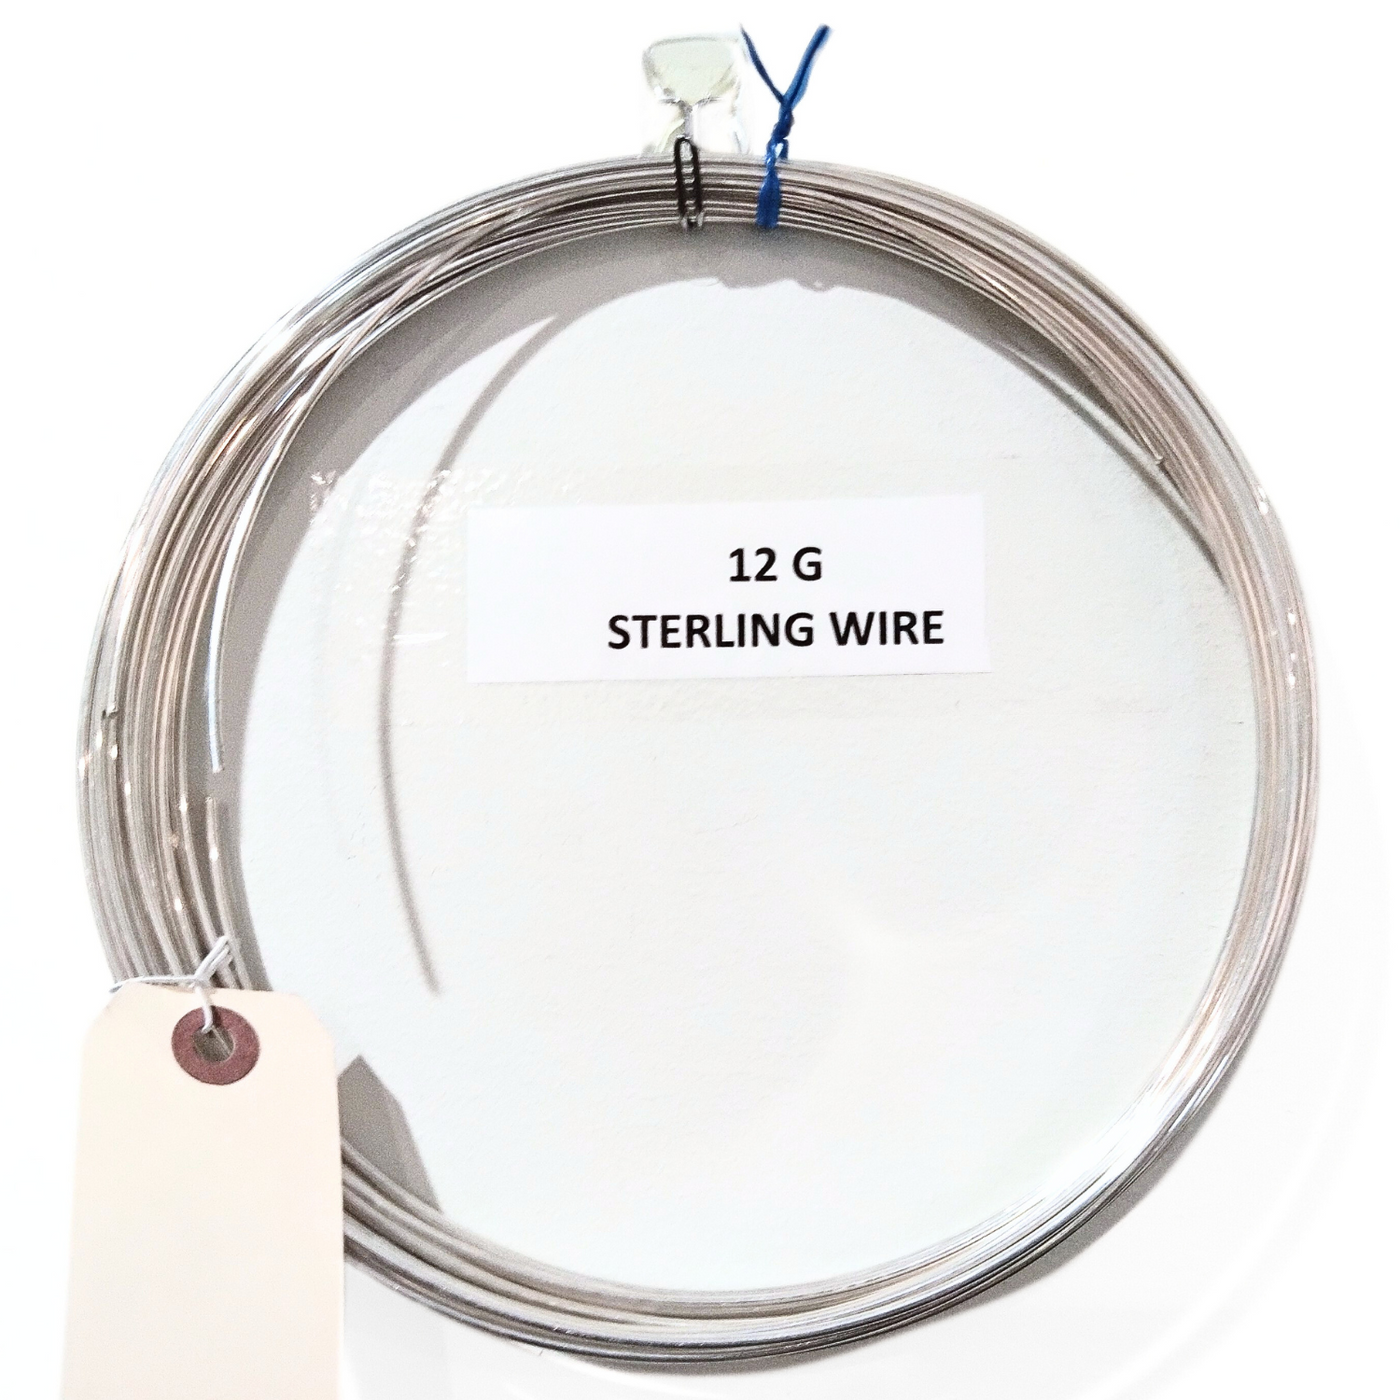 12g Sterling Wire, 1 Inch